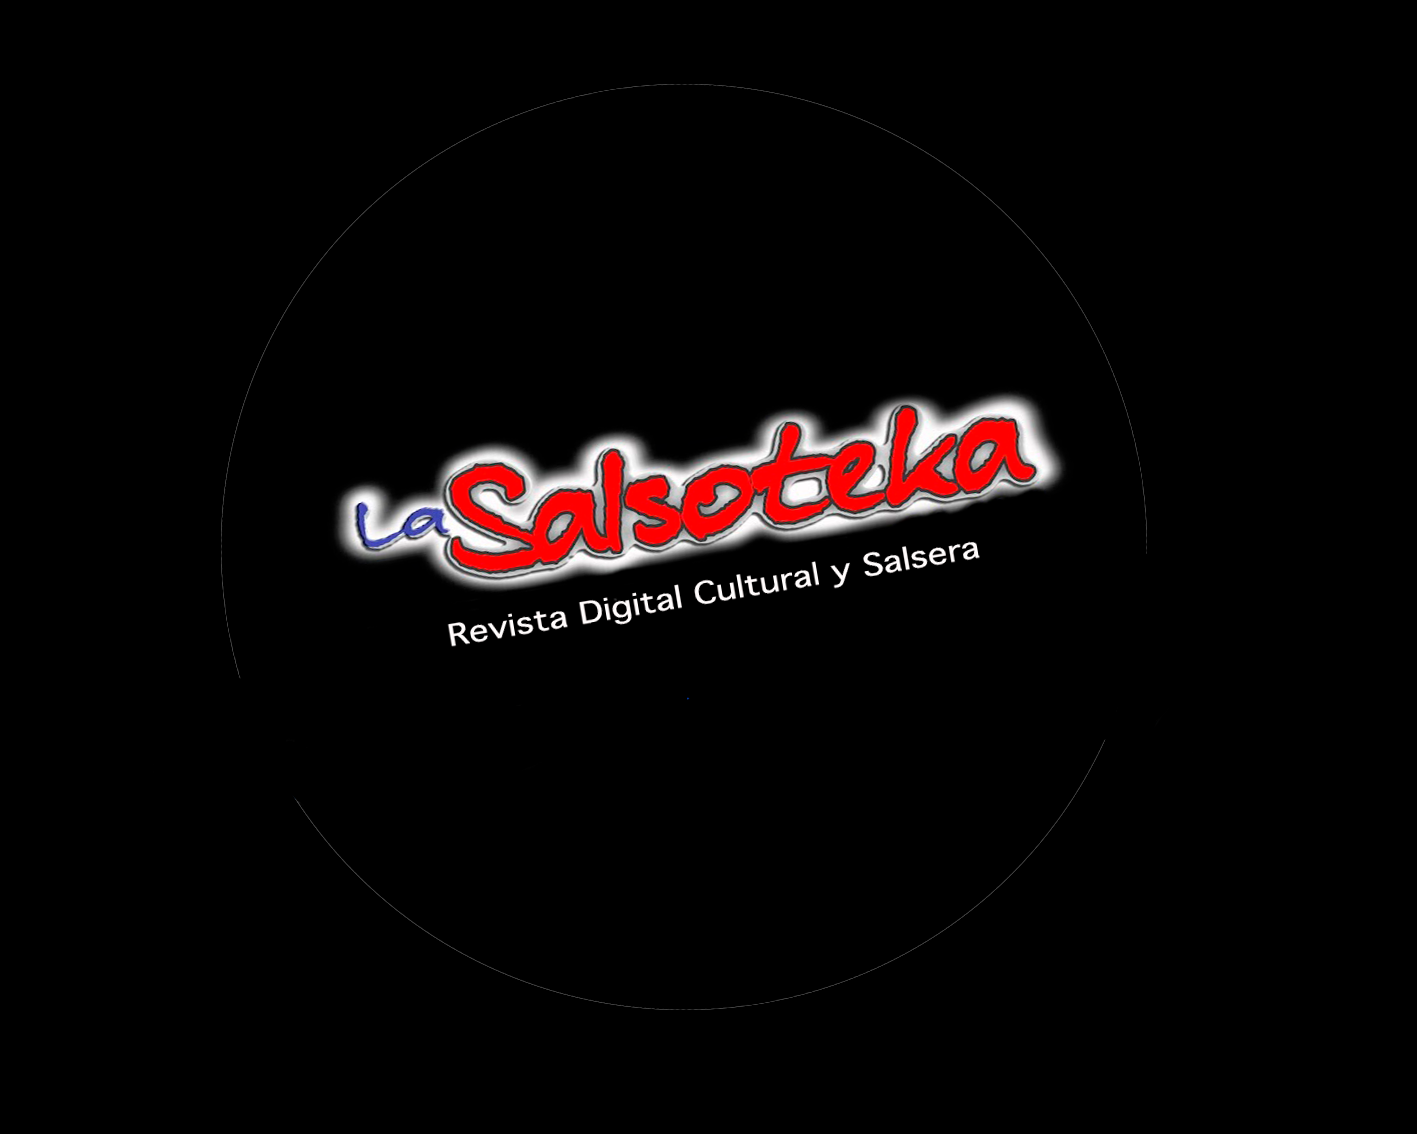 La Salsoteka